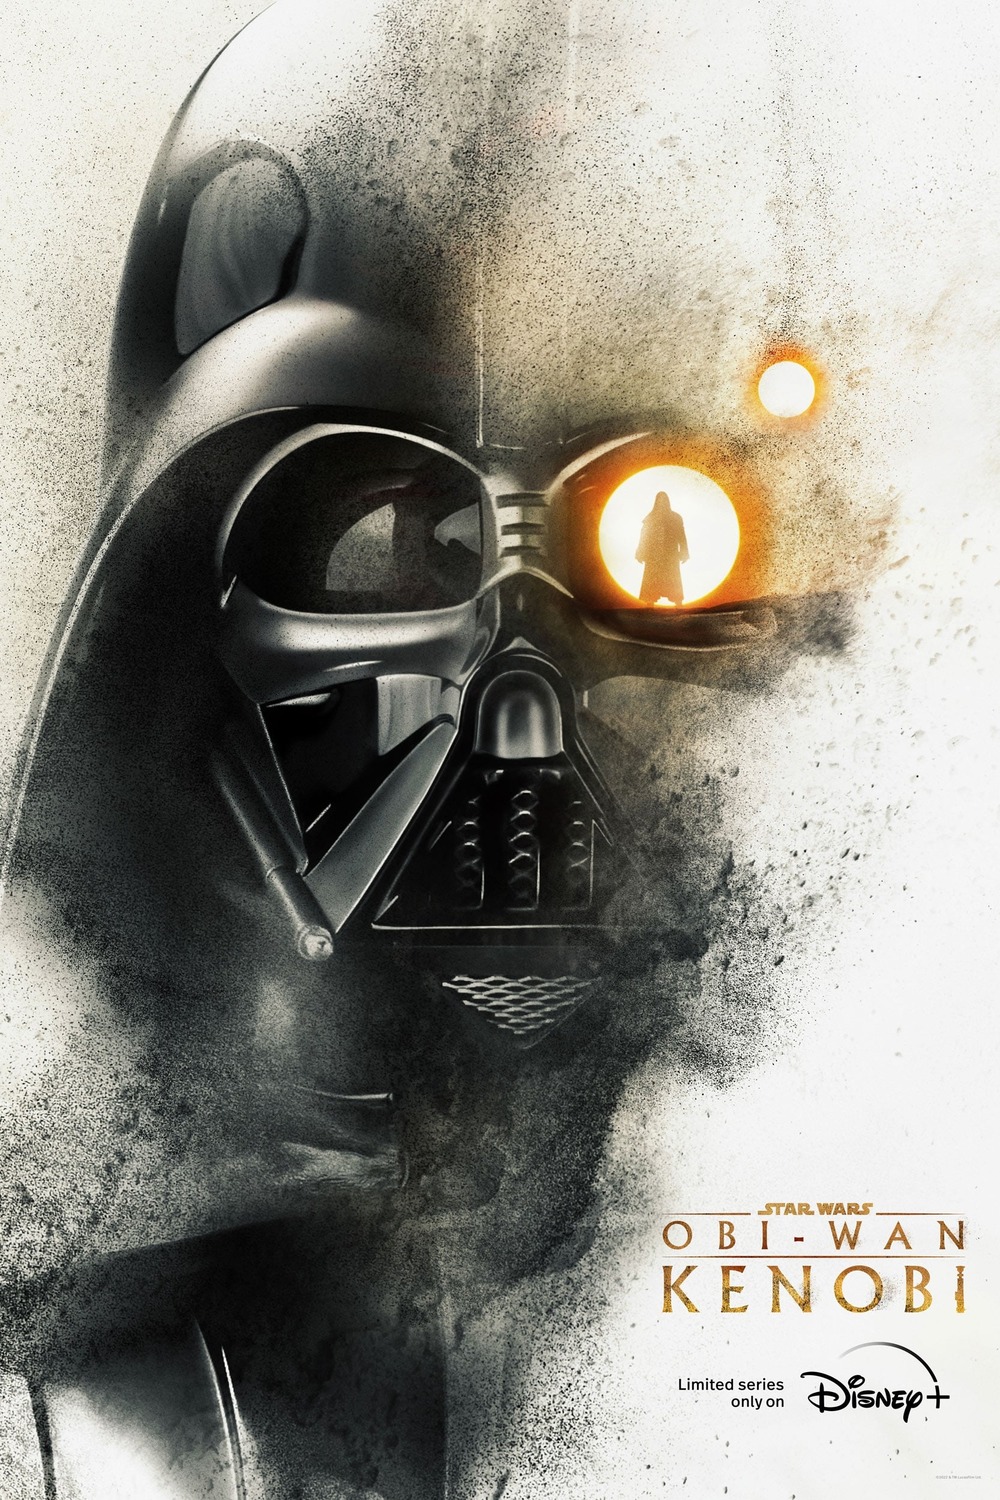 Extra Large TV Poster Image for Obi-Wan Kenobi (#9 of 15)